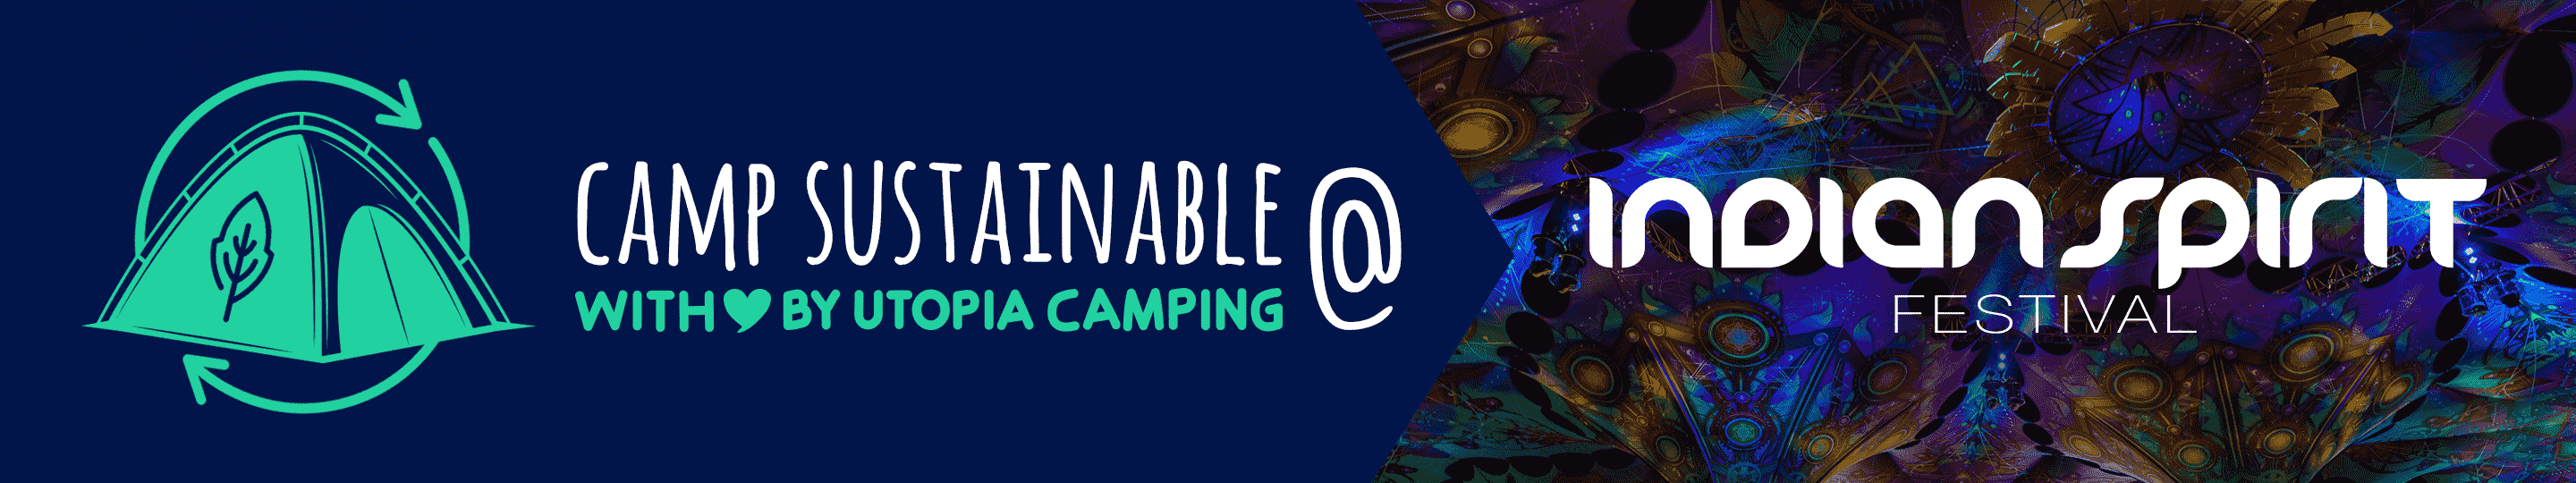 zelt vermieten rent a tent utopia camping festivals